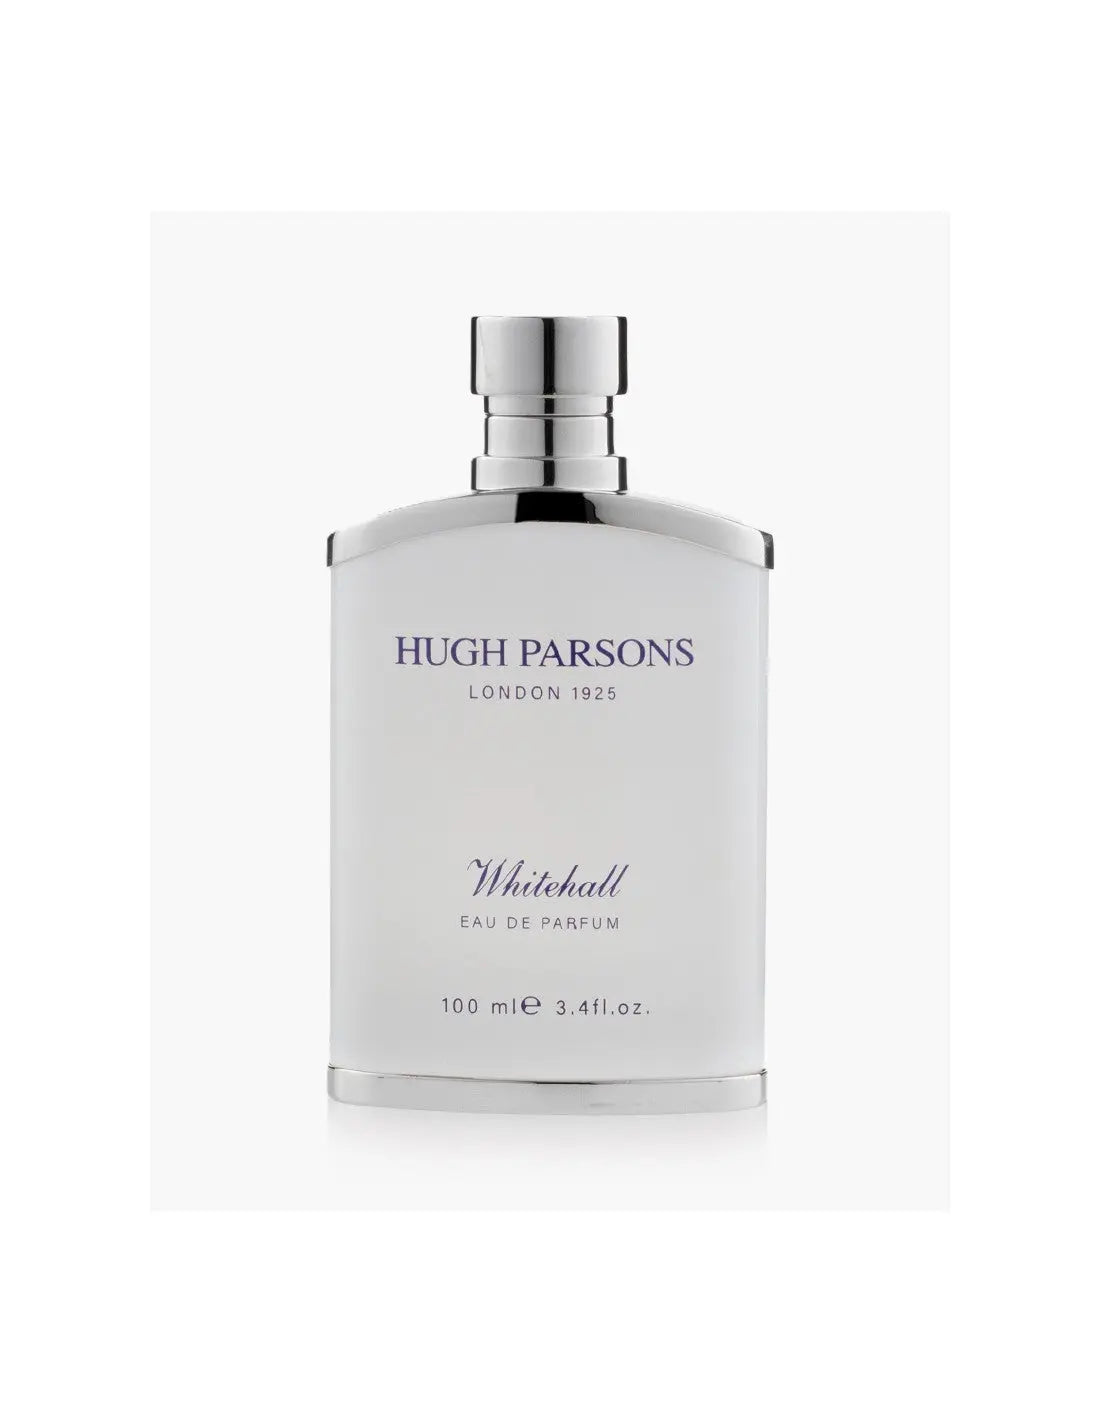 Hugh parsons Whitehall - 100 ml